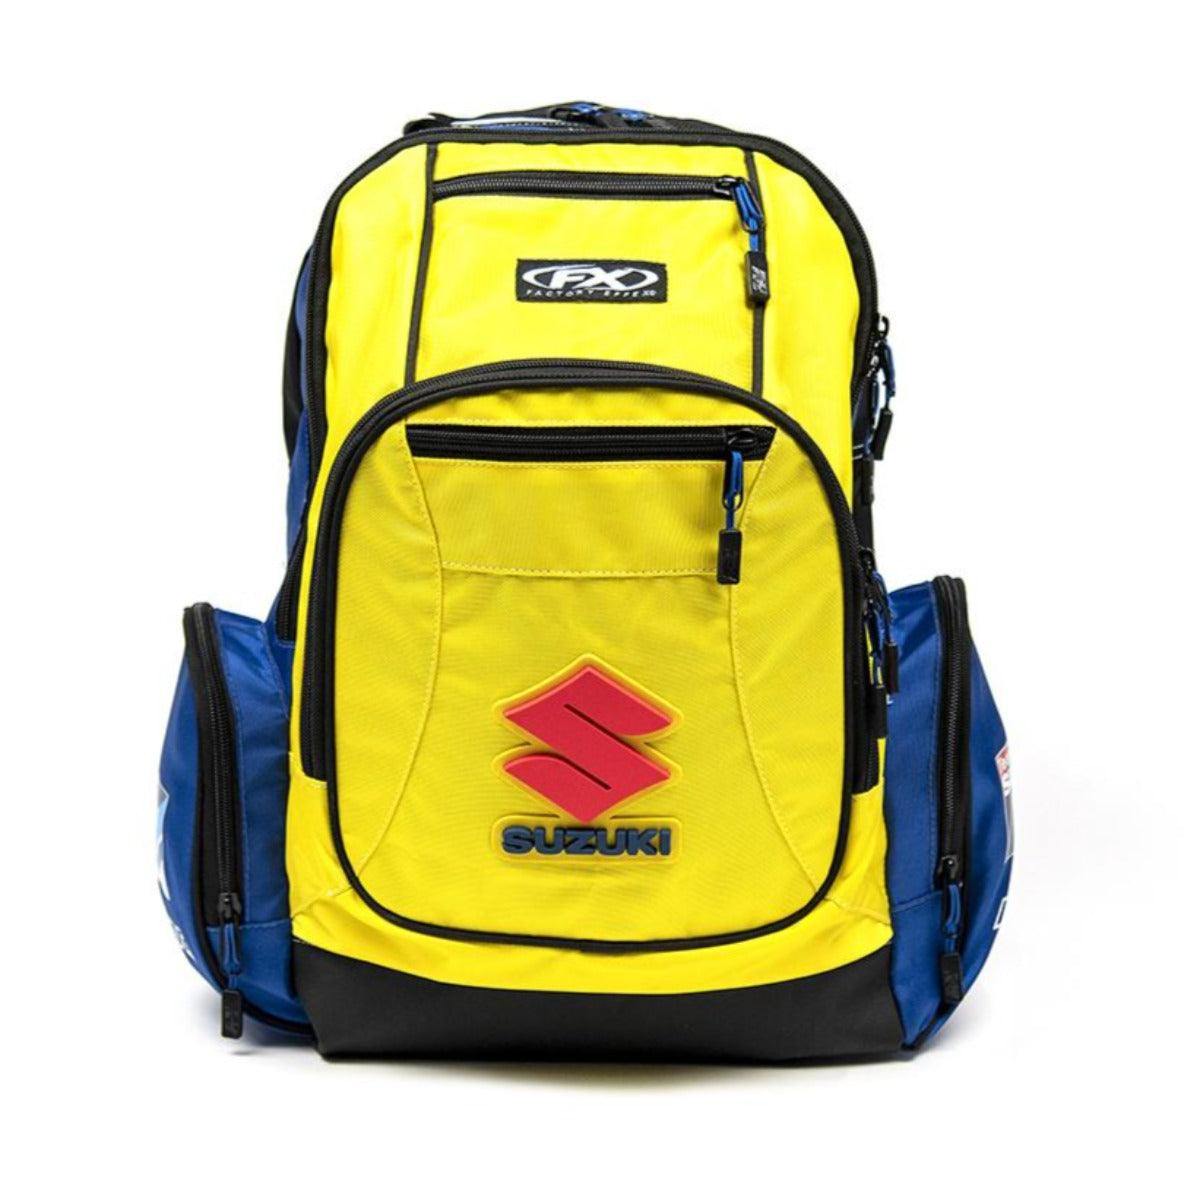 Factory Effex Suzuki Backpack Premium, Yellow/Blue - American Legend Rider